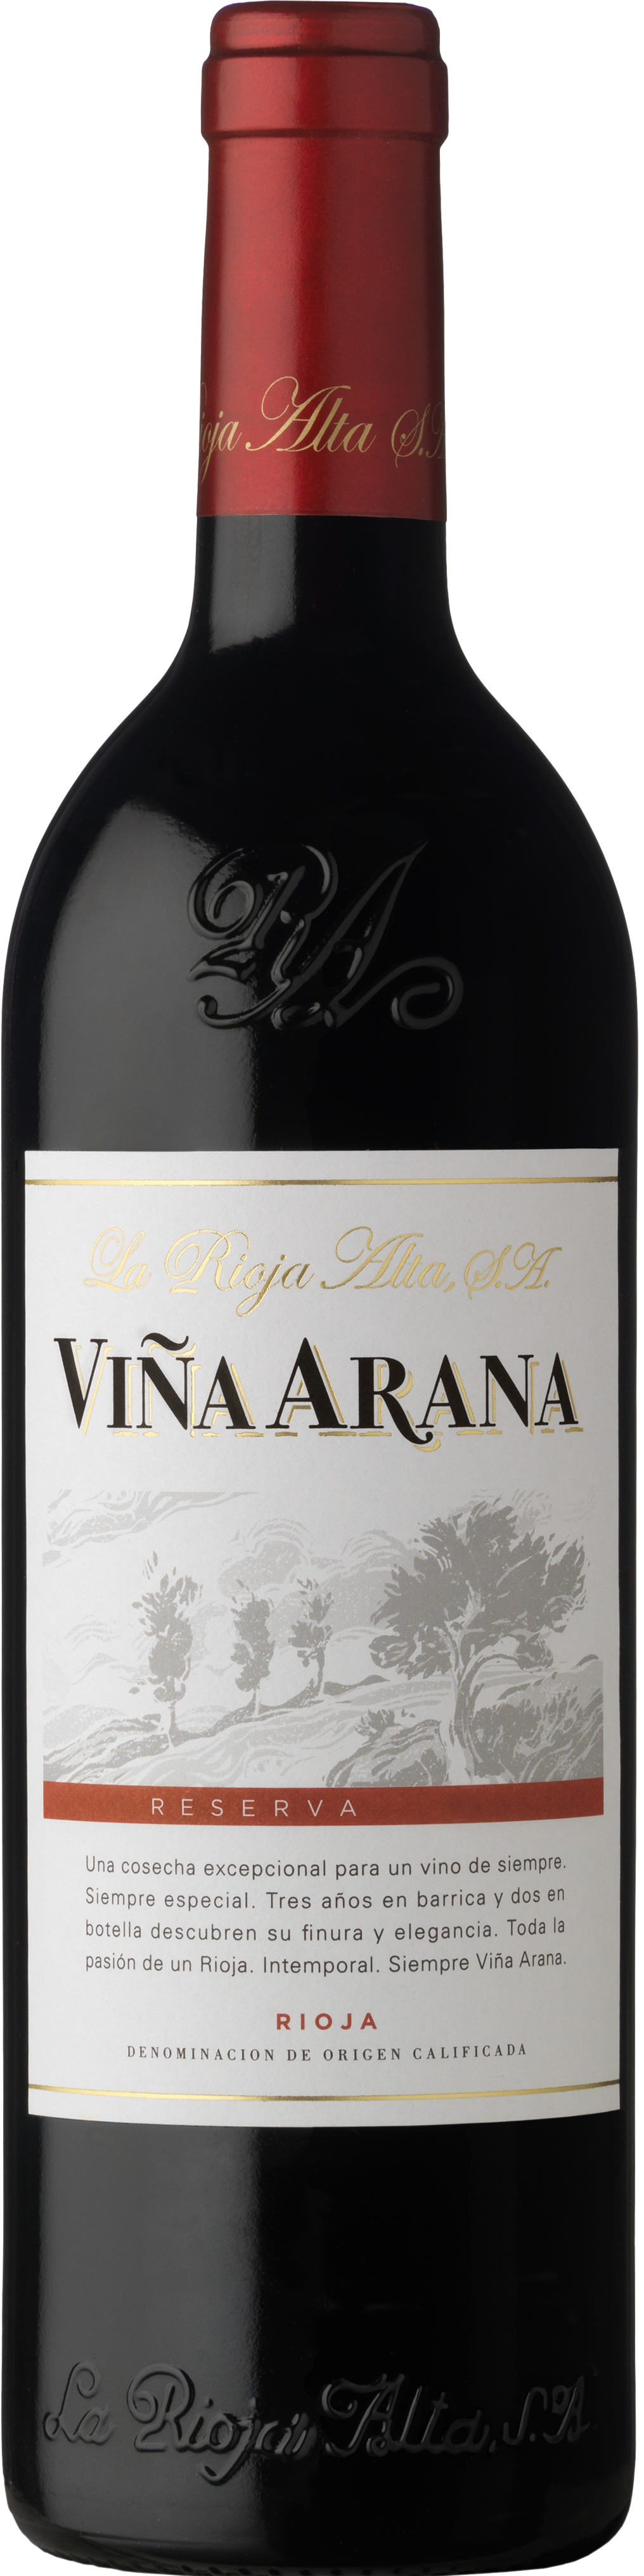 Bottle shot of 2009 Viña Arana Reserva - promotion